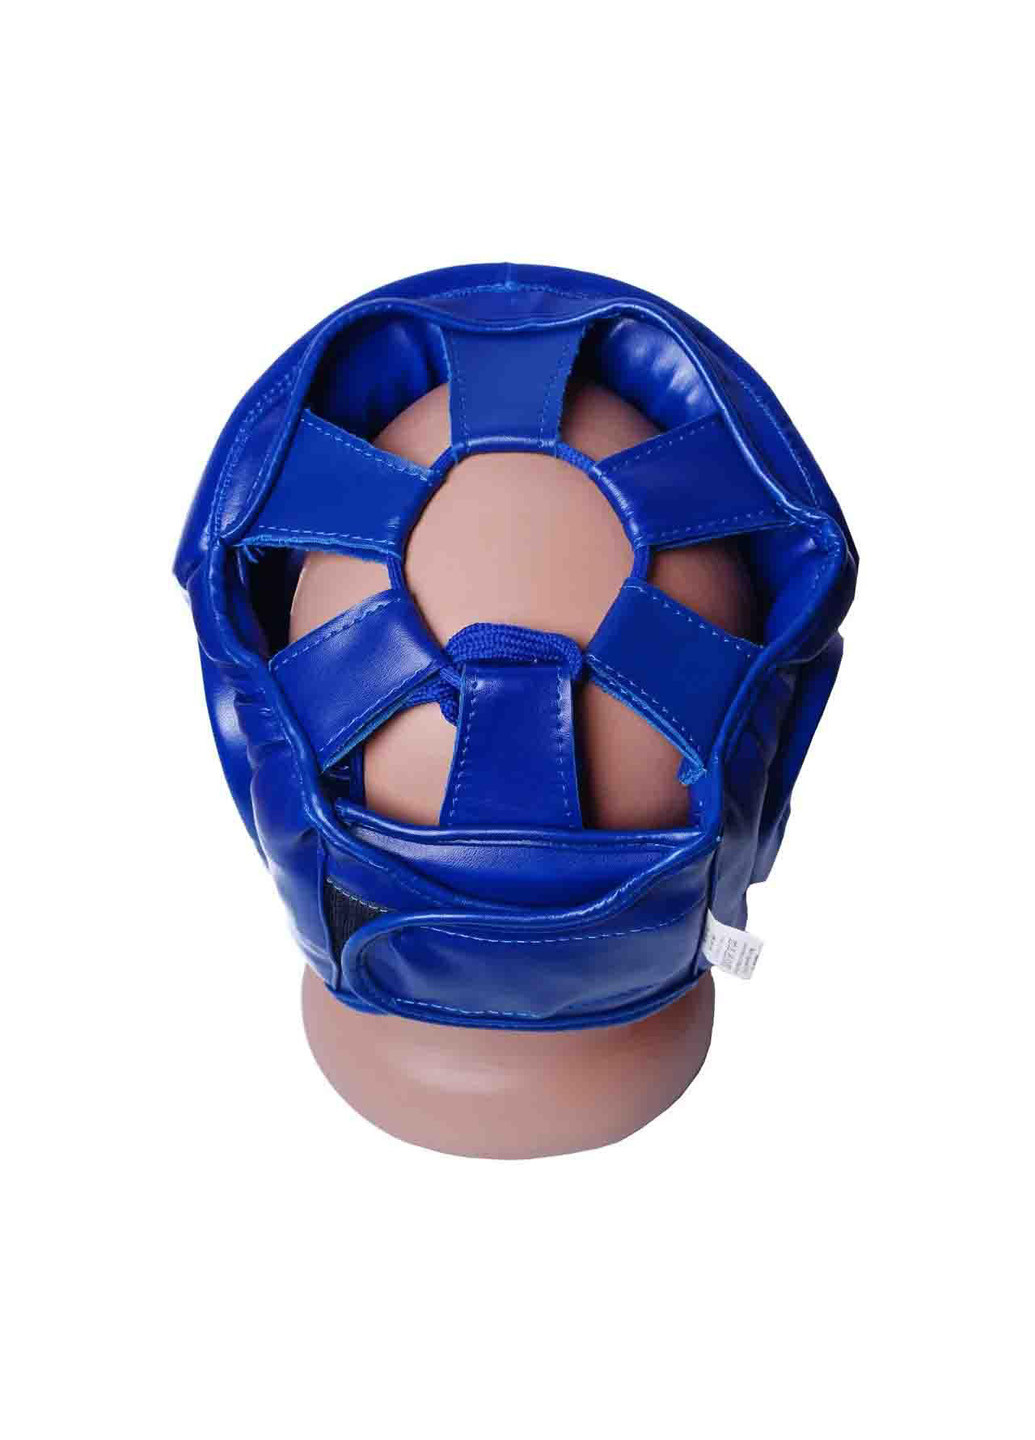 Боксерский шлем M PowerPlay (196422805)